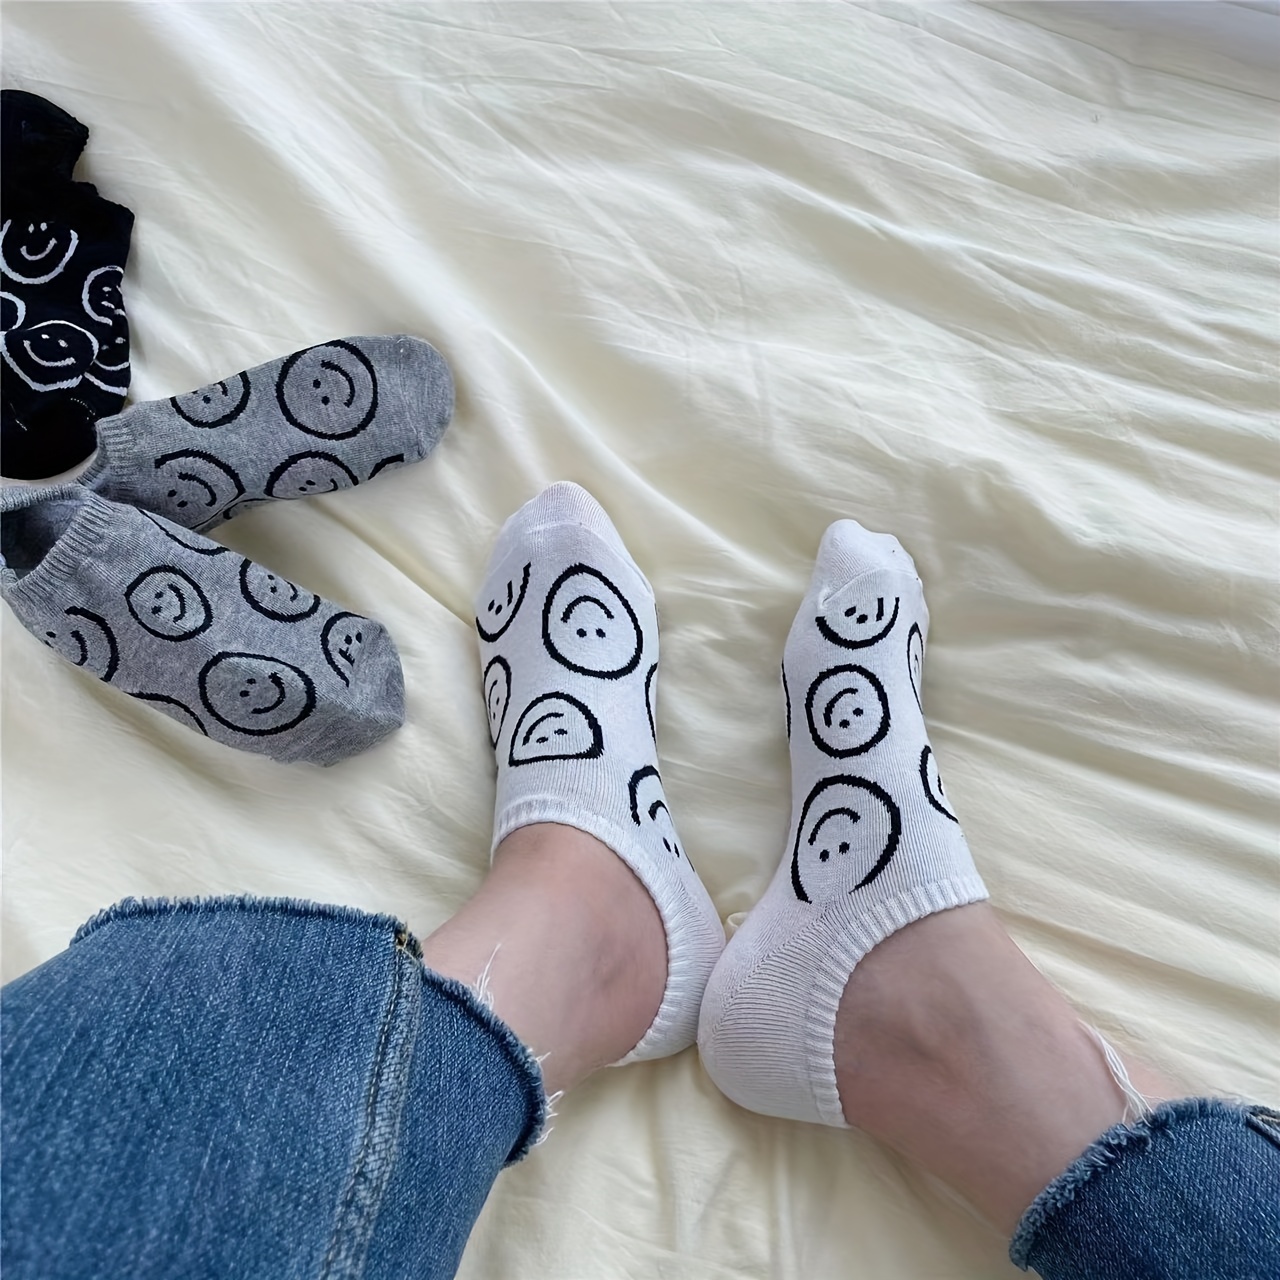 3 pairs smiling print socks soft lightweight low cut ankle socks womens stockings hosiery details 0